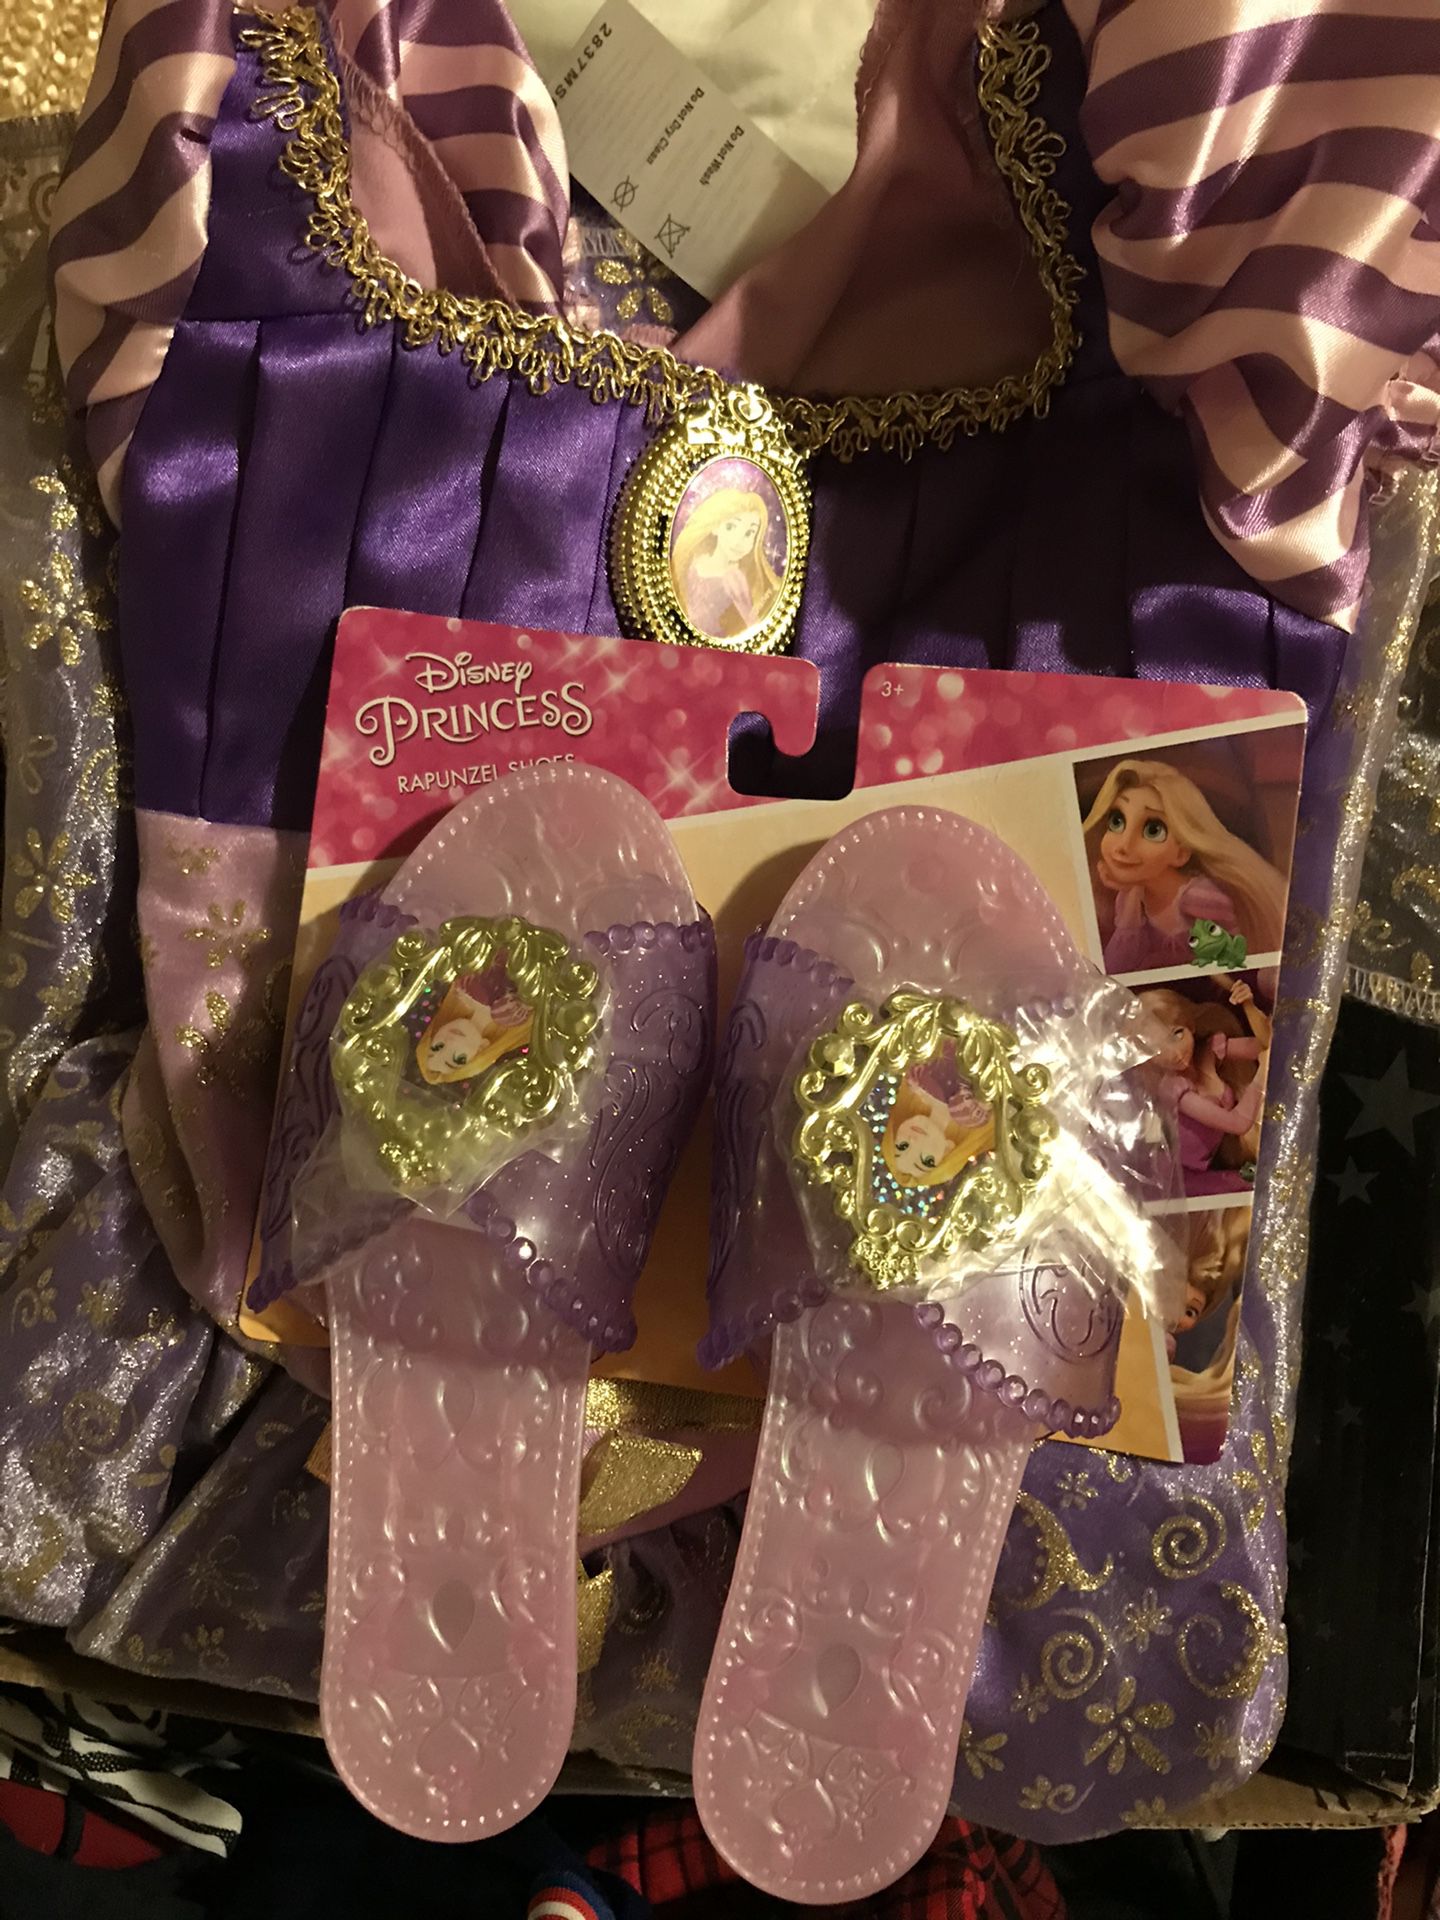 Princess Rapunzel costume dress and shoes